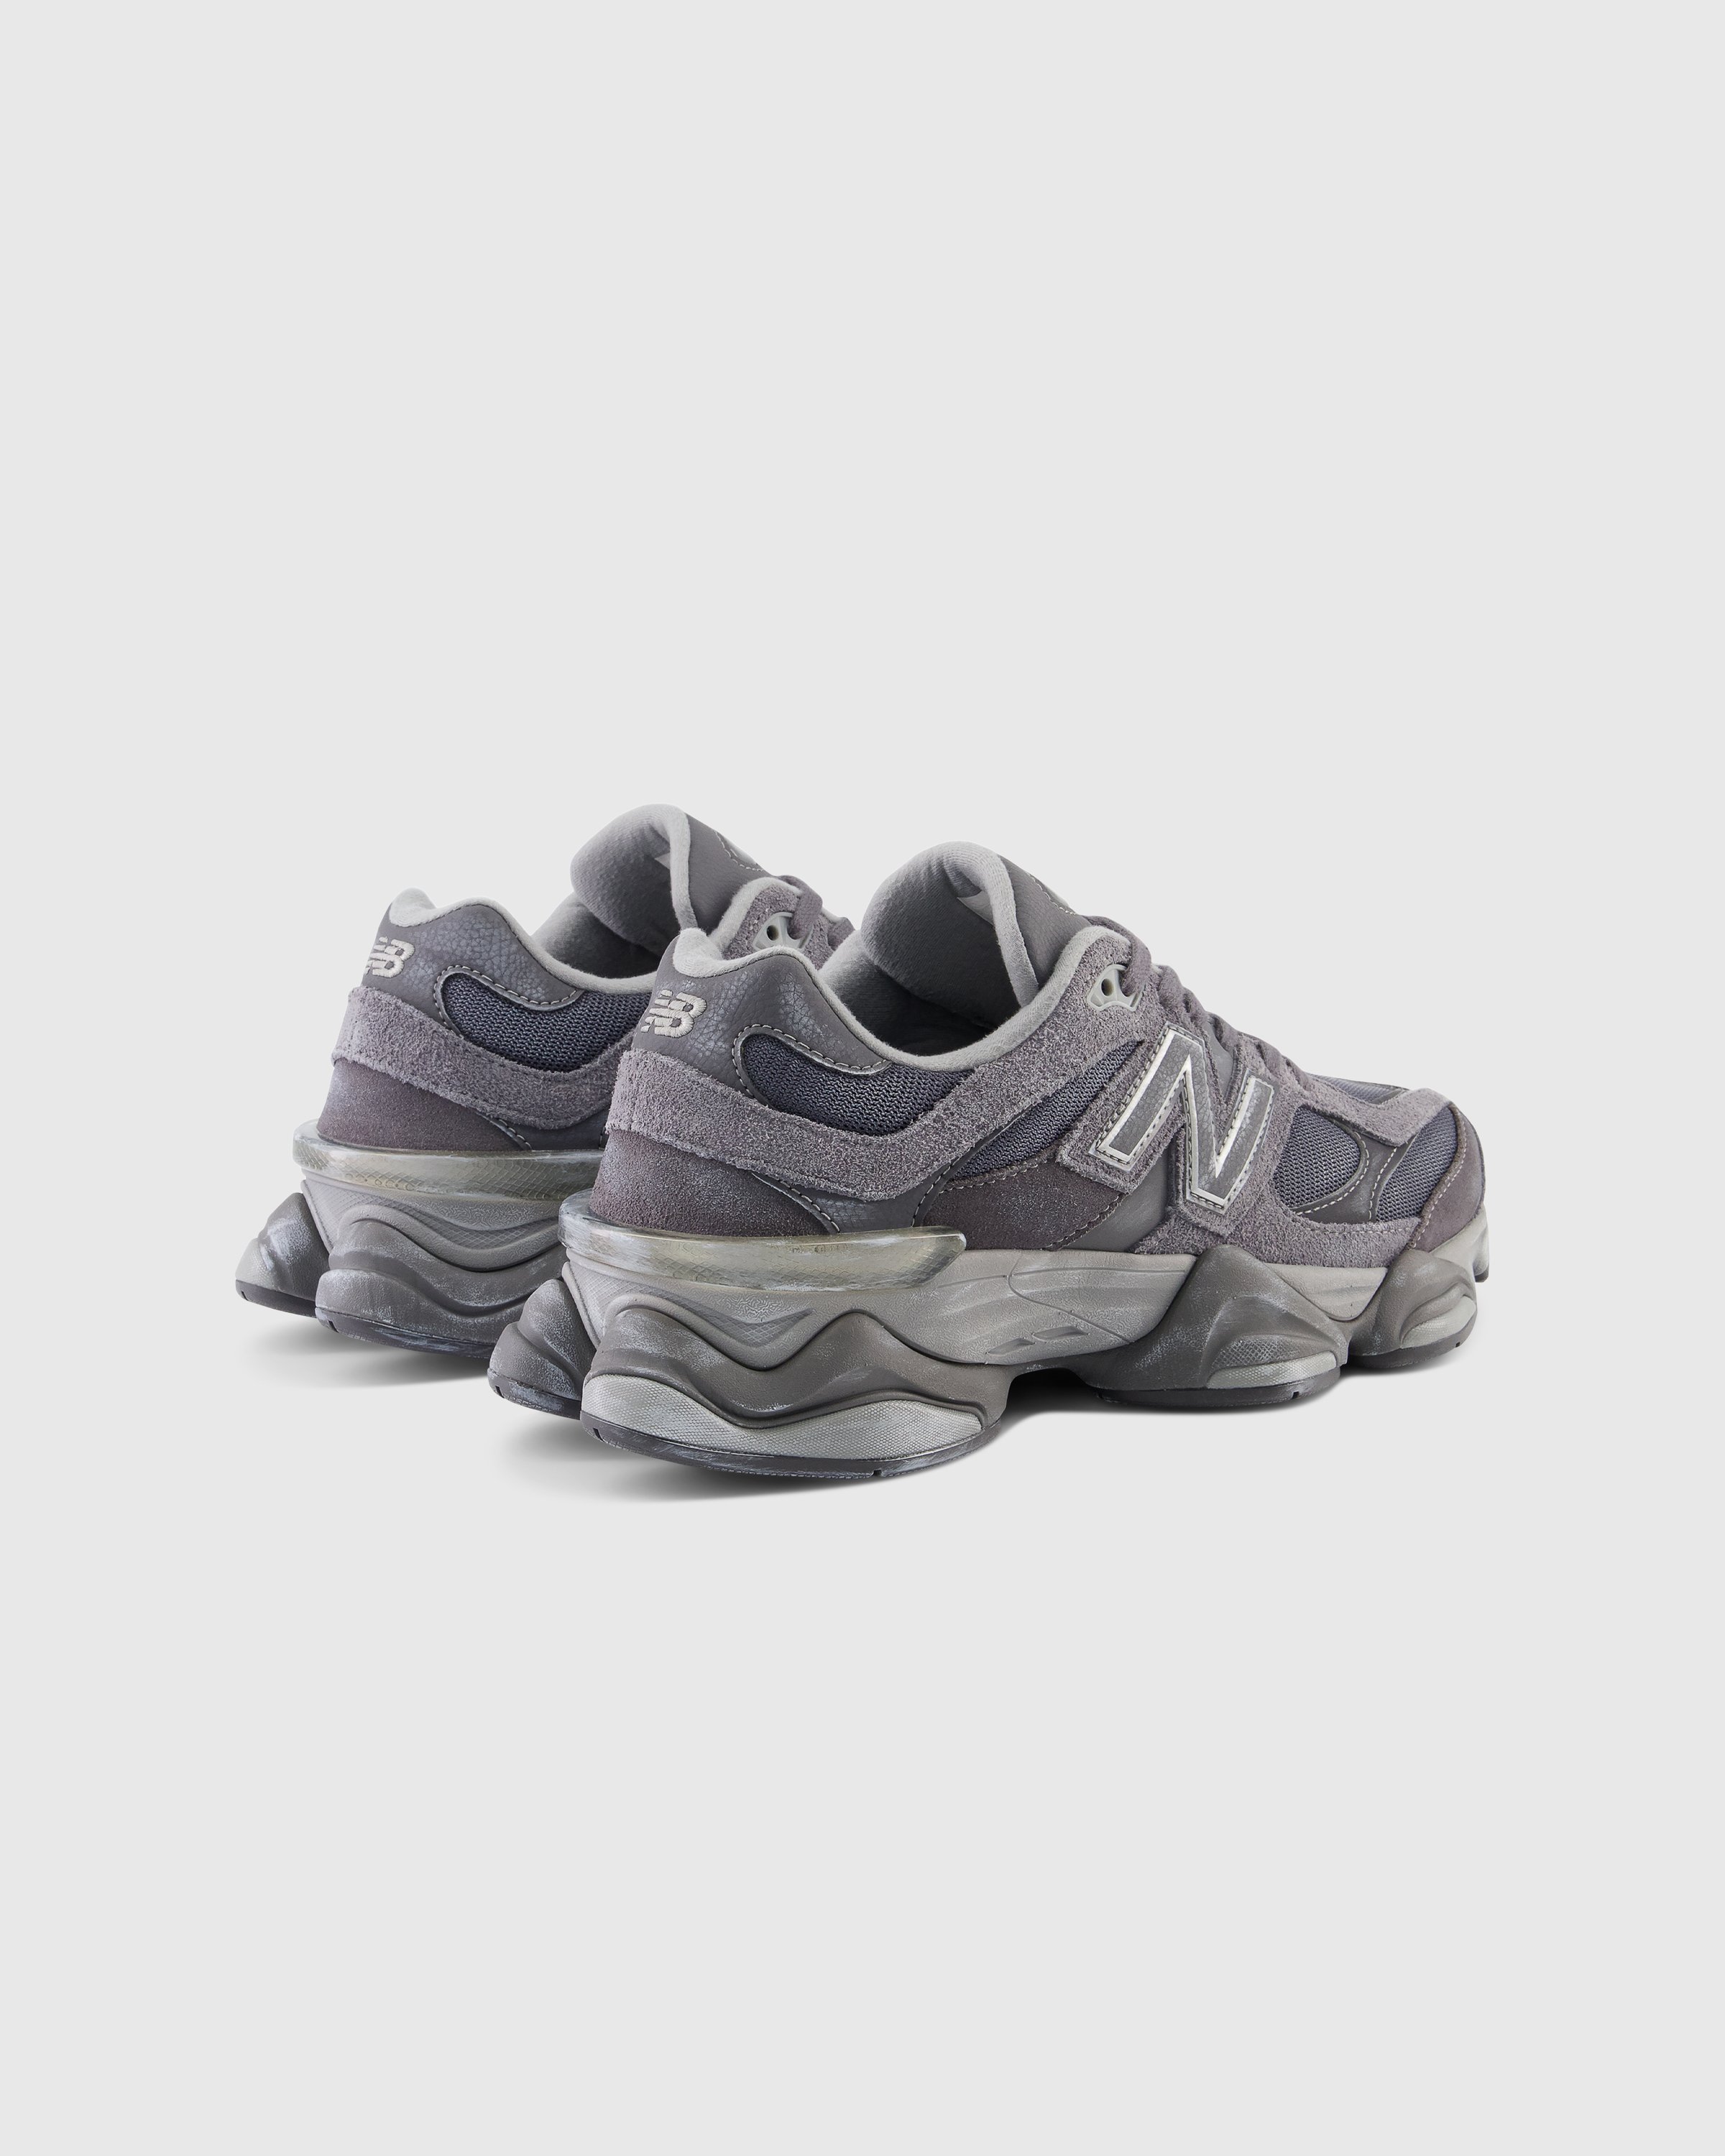 New Balance - U 9060 SG Magnet - Footwear - Grey - Image 3